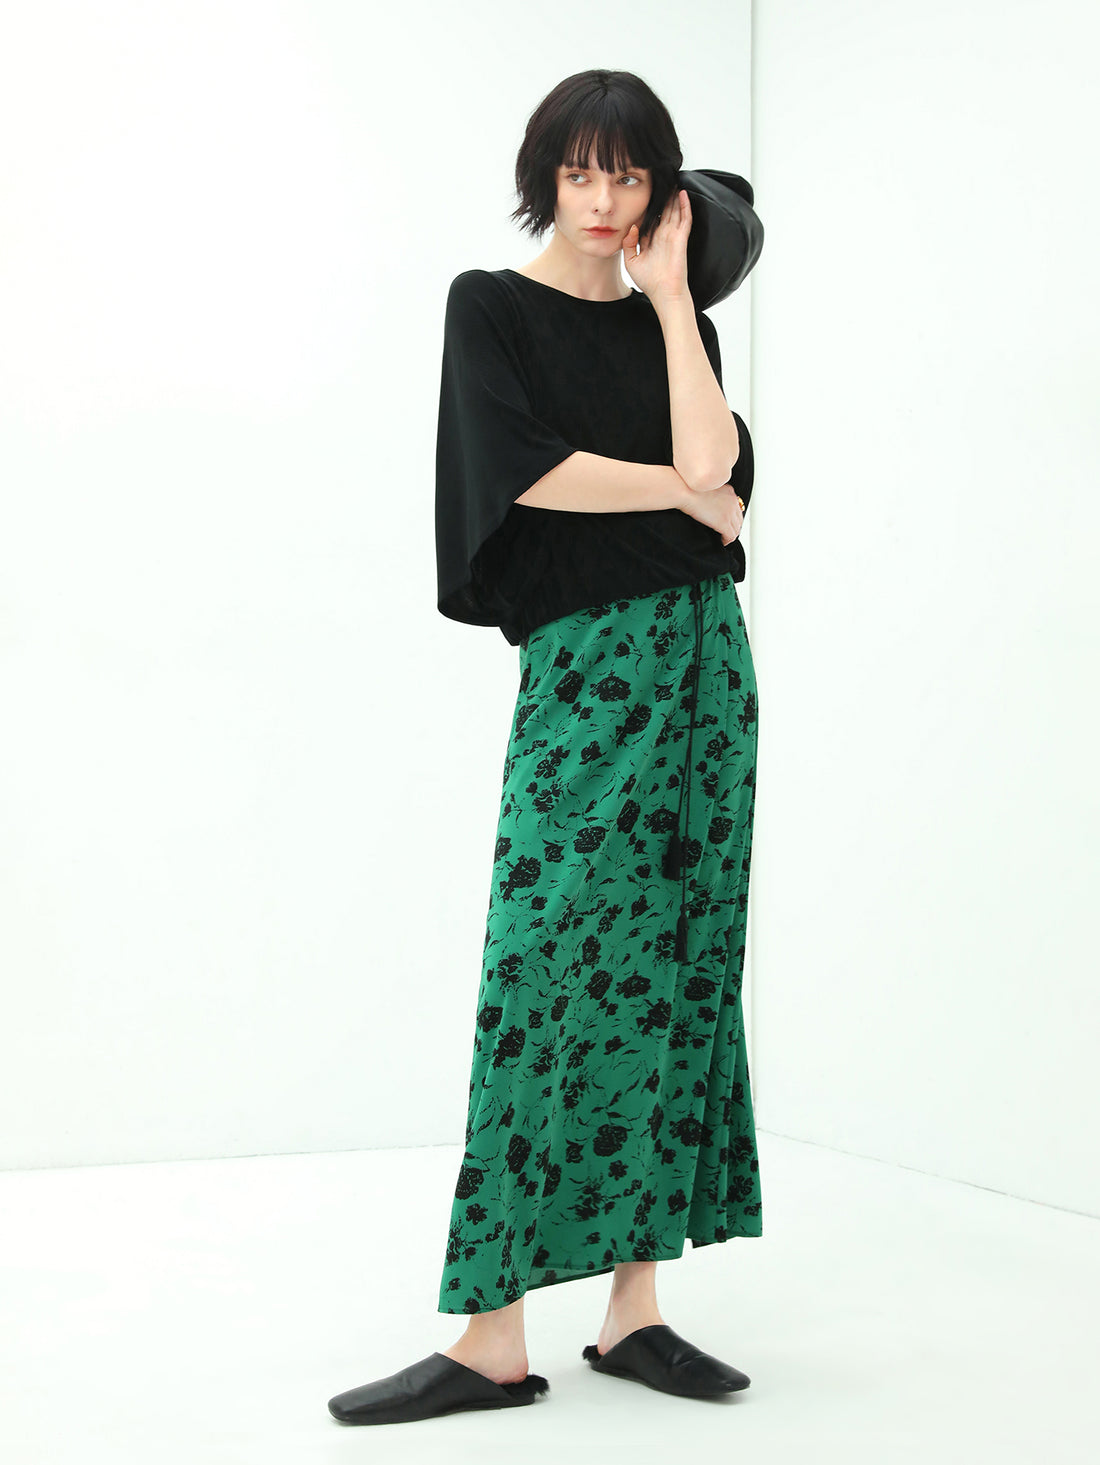 Floral Green and Black High-Waist Midi Skirt